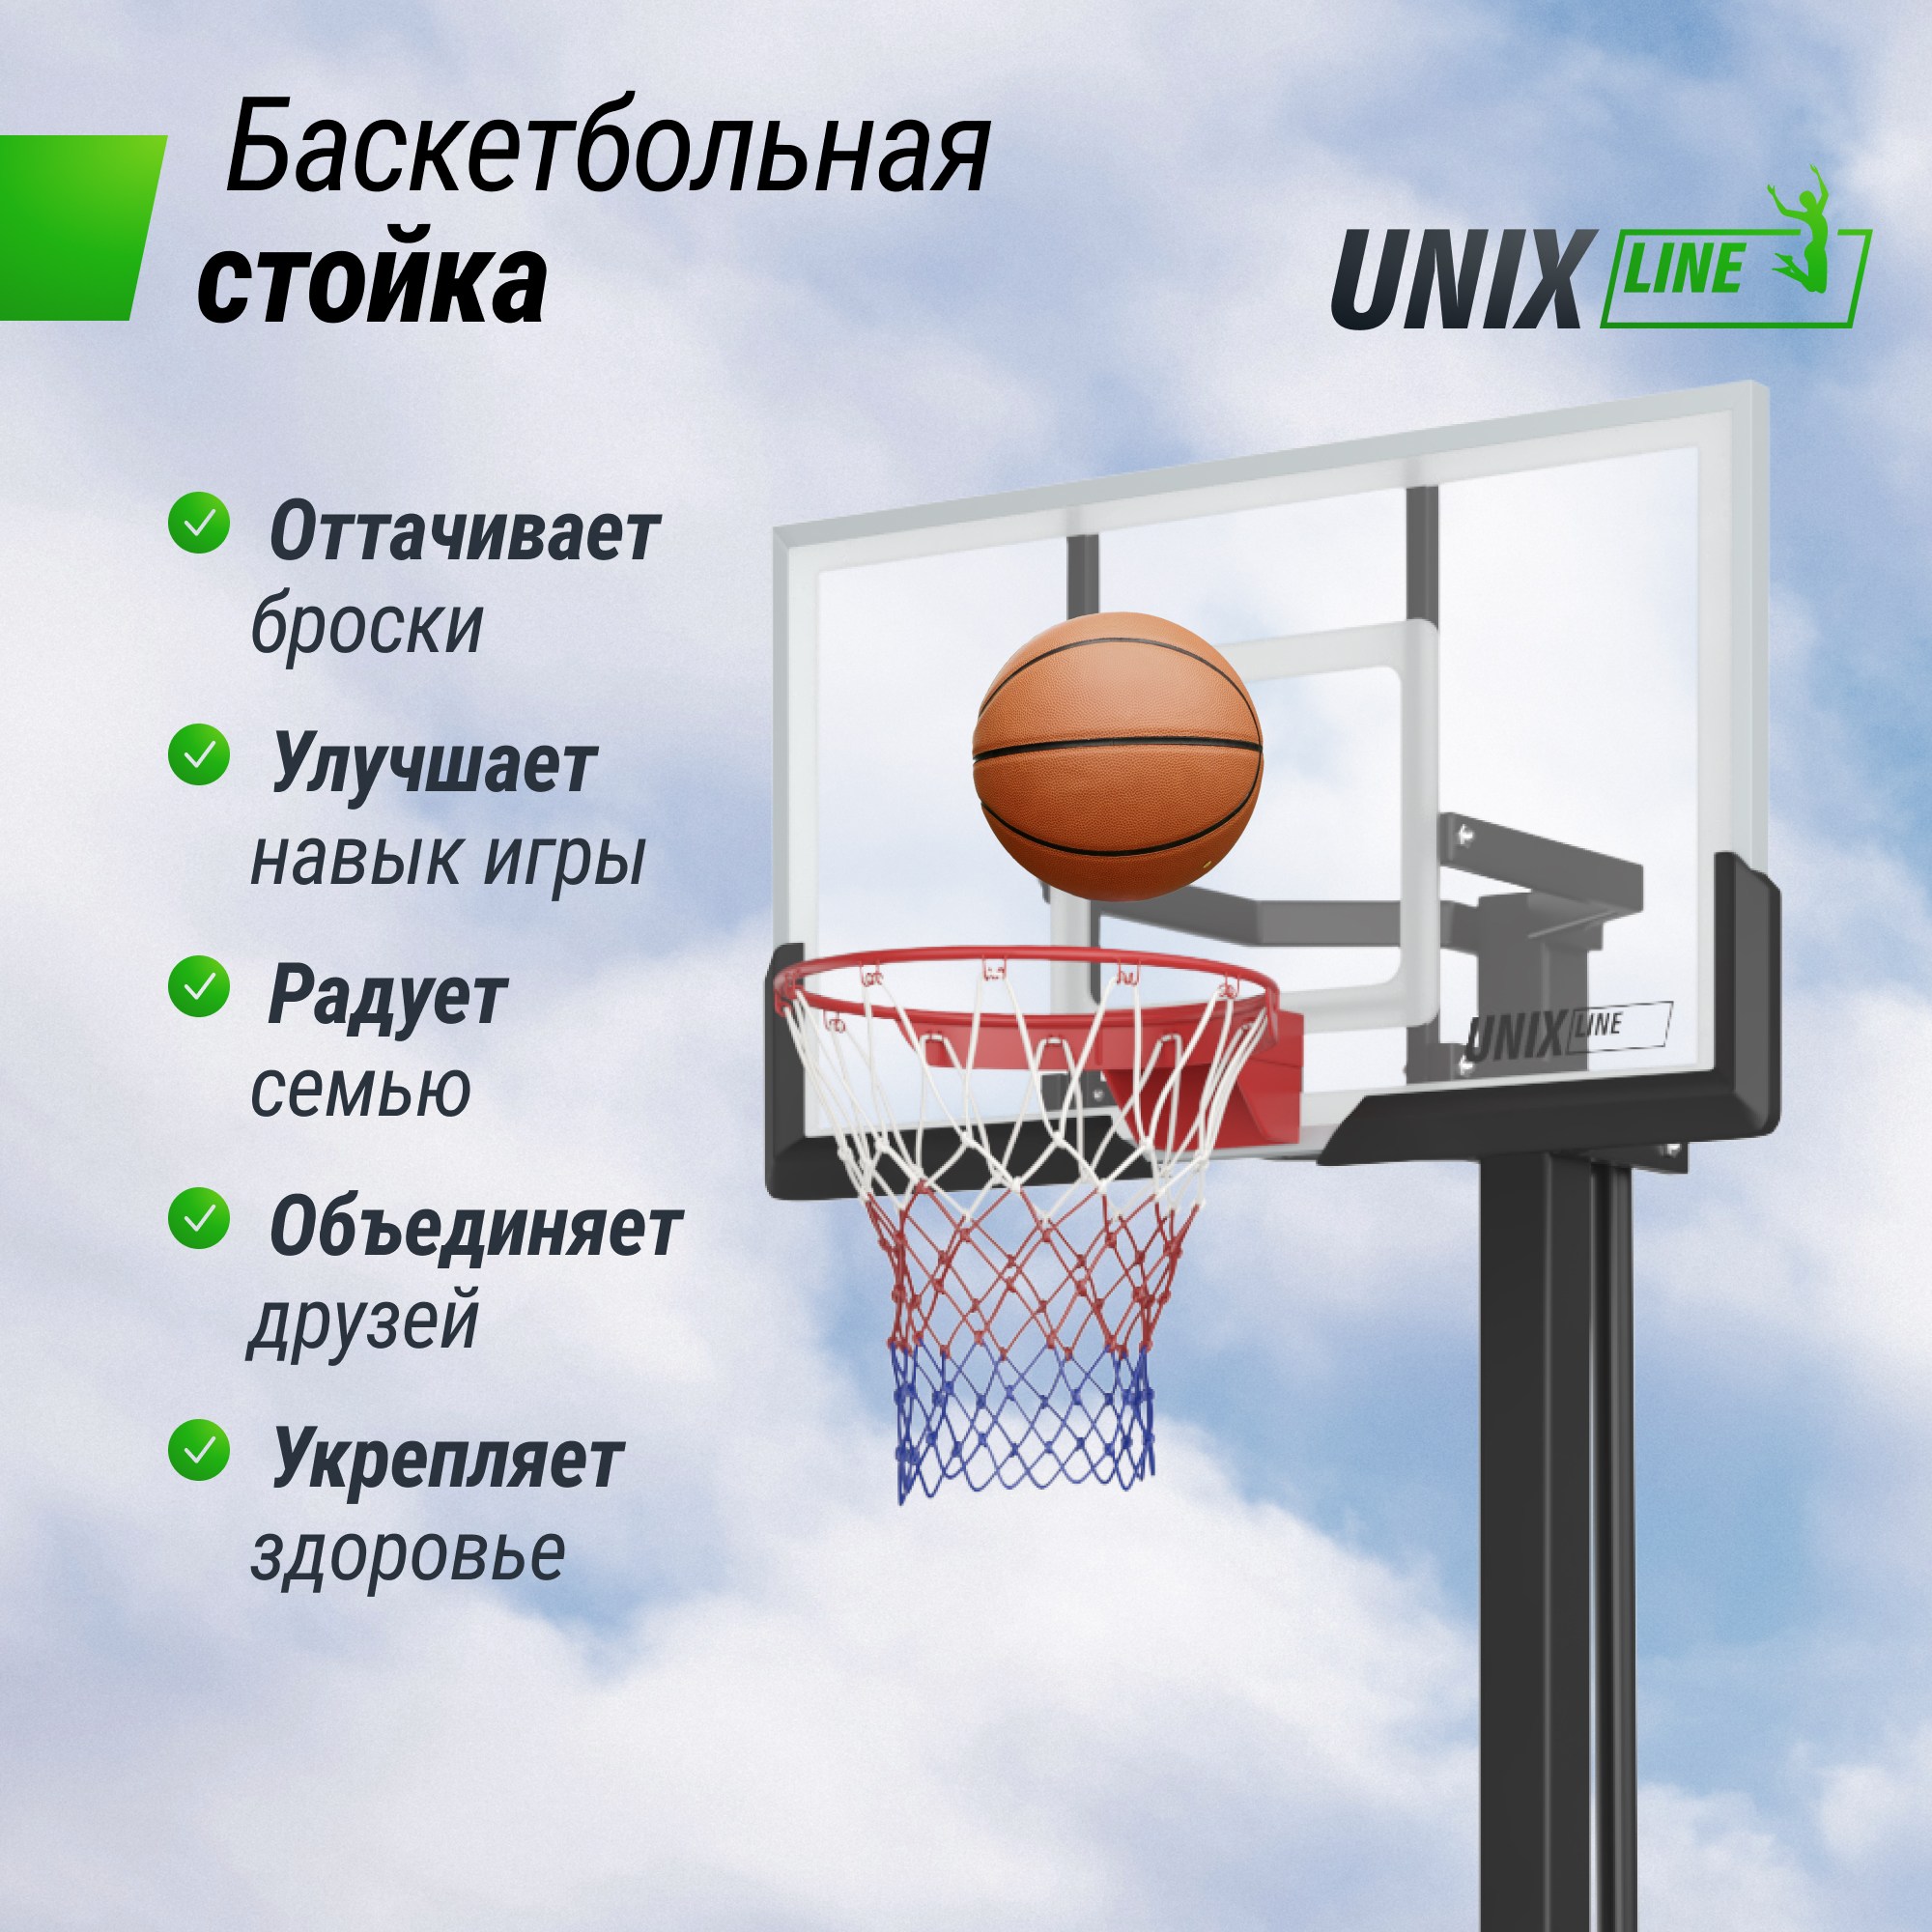 Баскетбольная стойка стационарная Unix Line B-Stand-PC 54"x32" R45 H230-305см BSTSSTPR305_54PCBK 2000_2000